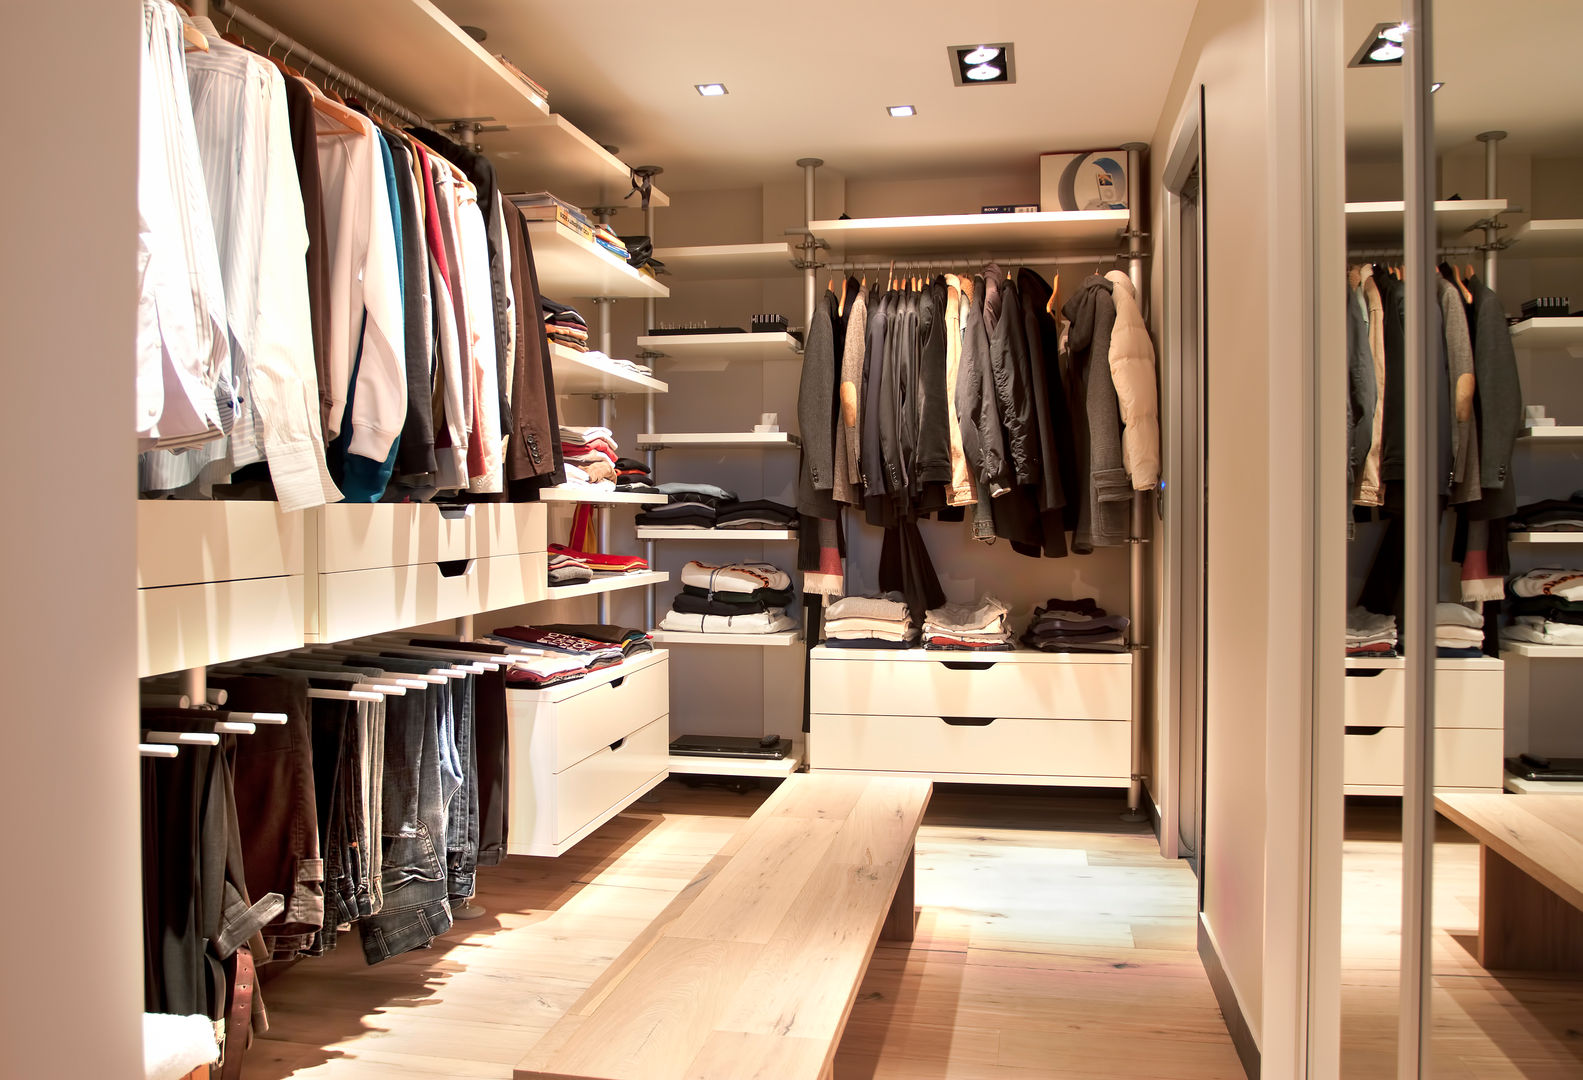 SAHİLEVLERİ PROJE, As Tasarım - Mimarlık As Tasarım - Mimarlık Modern dressing room Wardrobes & drawers